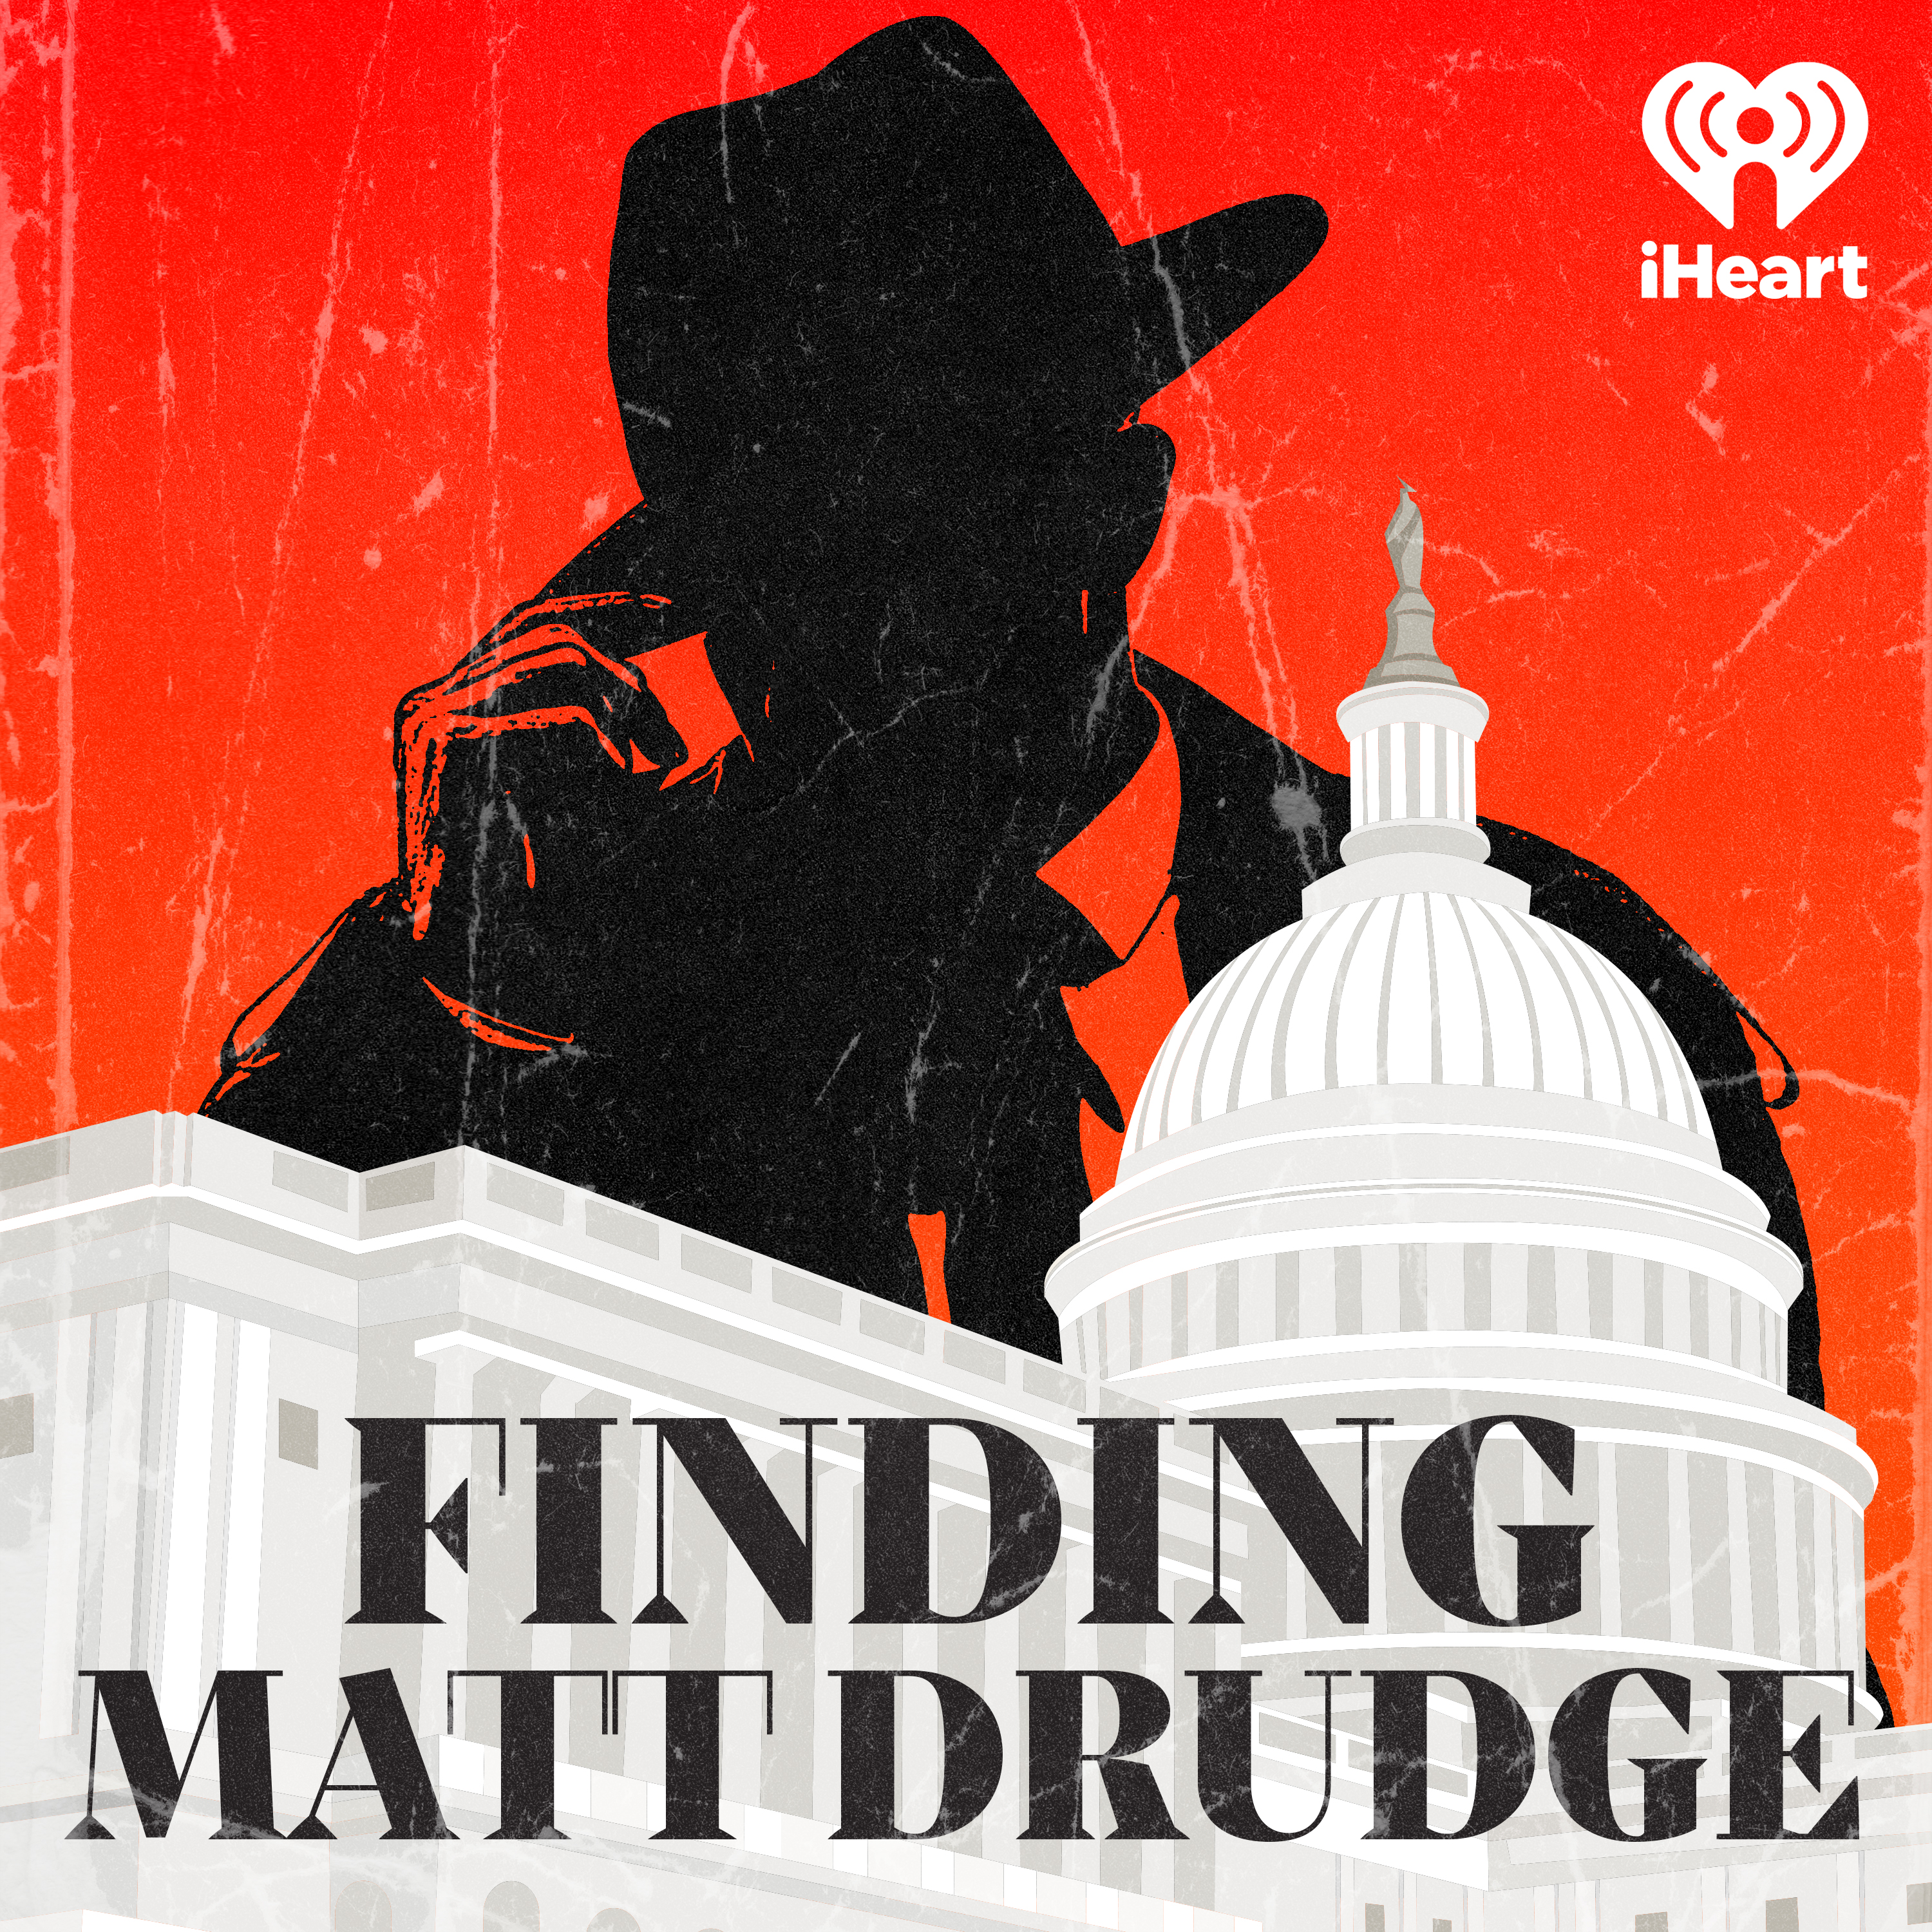 Matt Drudge's Power over the News Industry